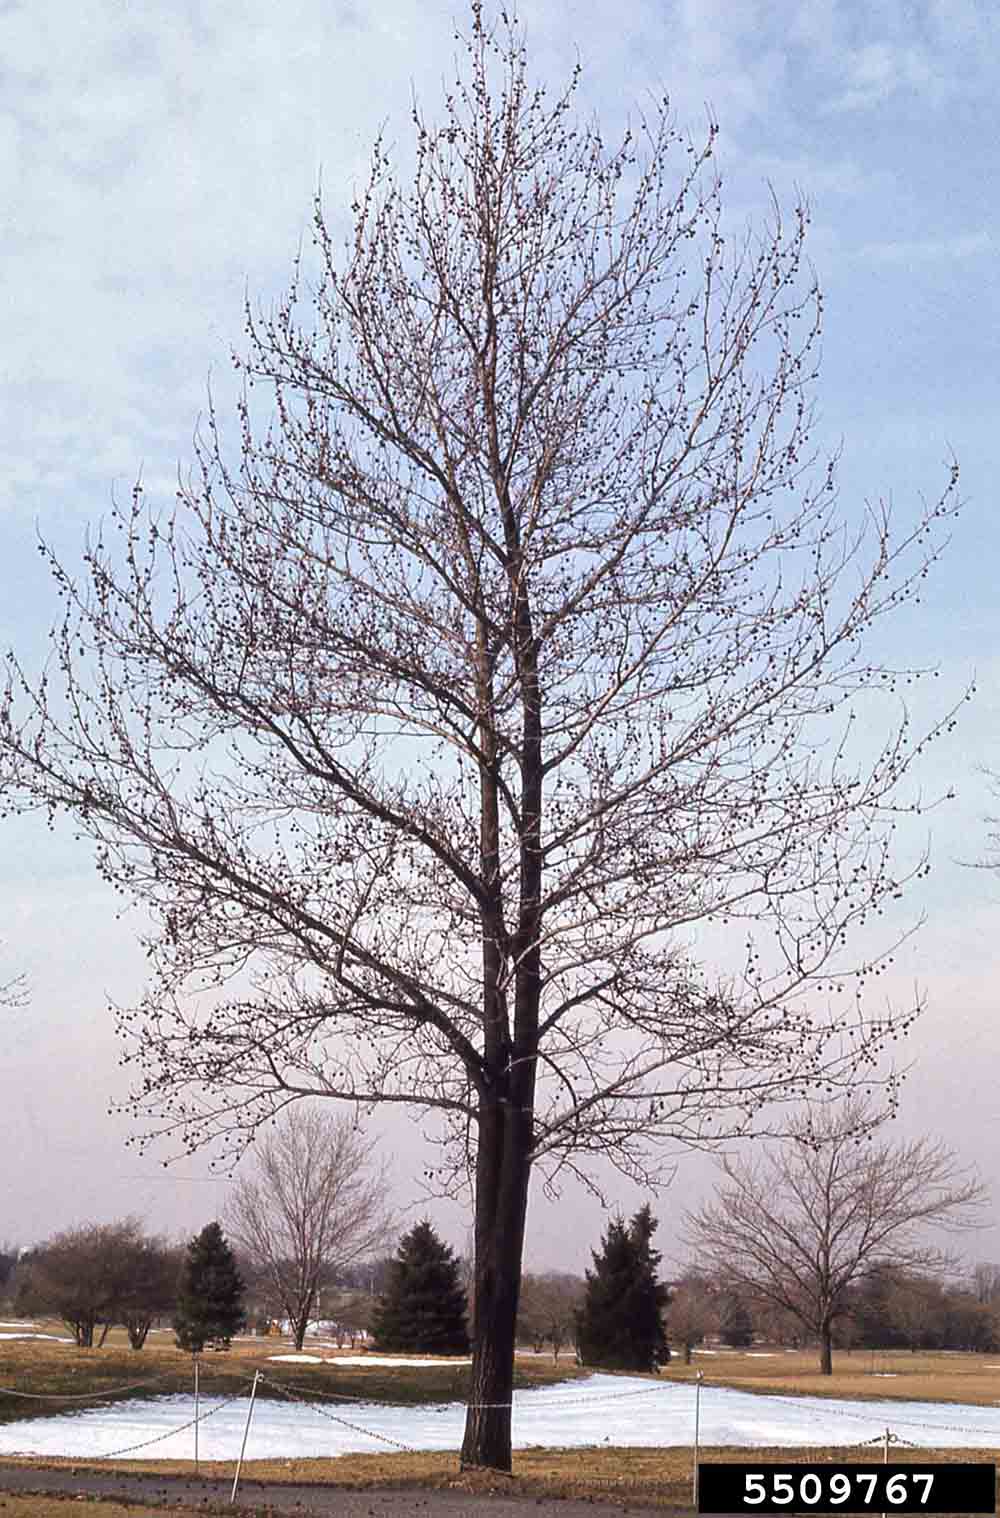 Sweetgum tree with fruit, winter